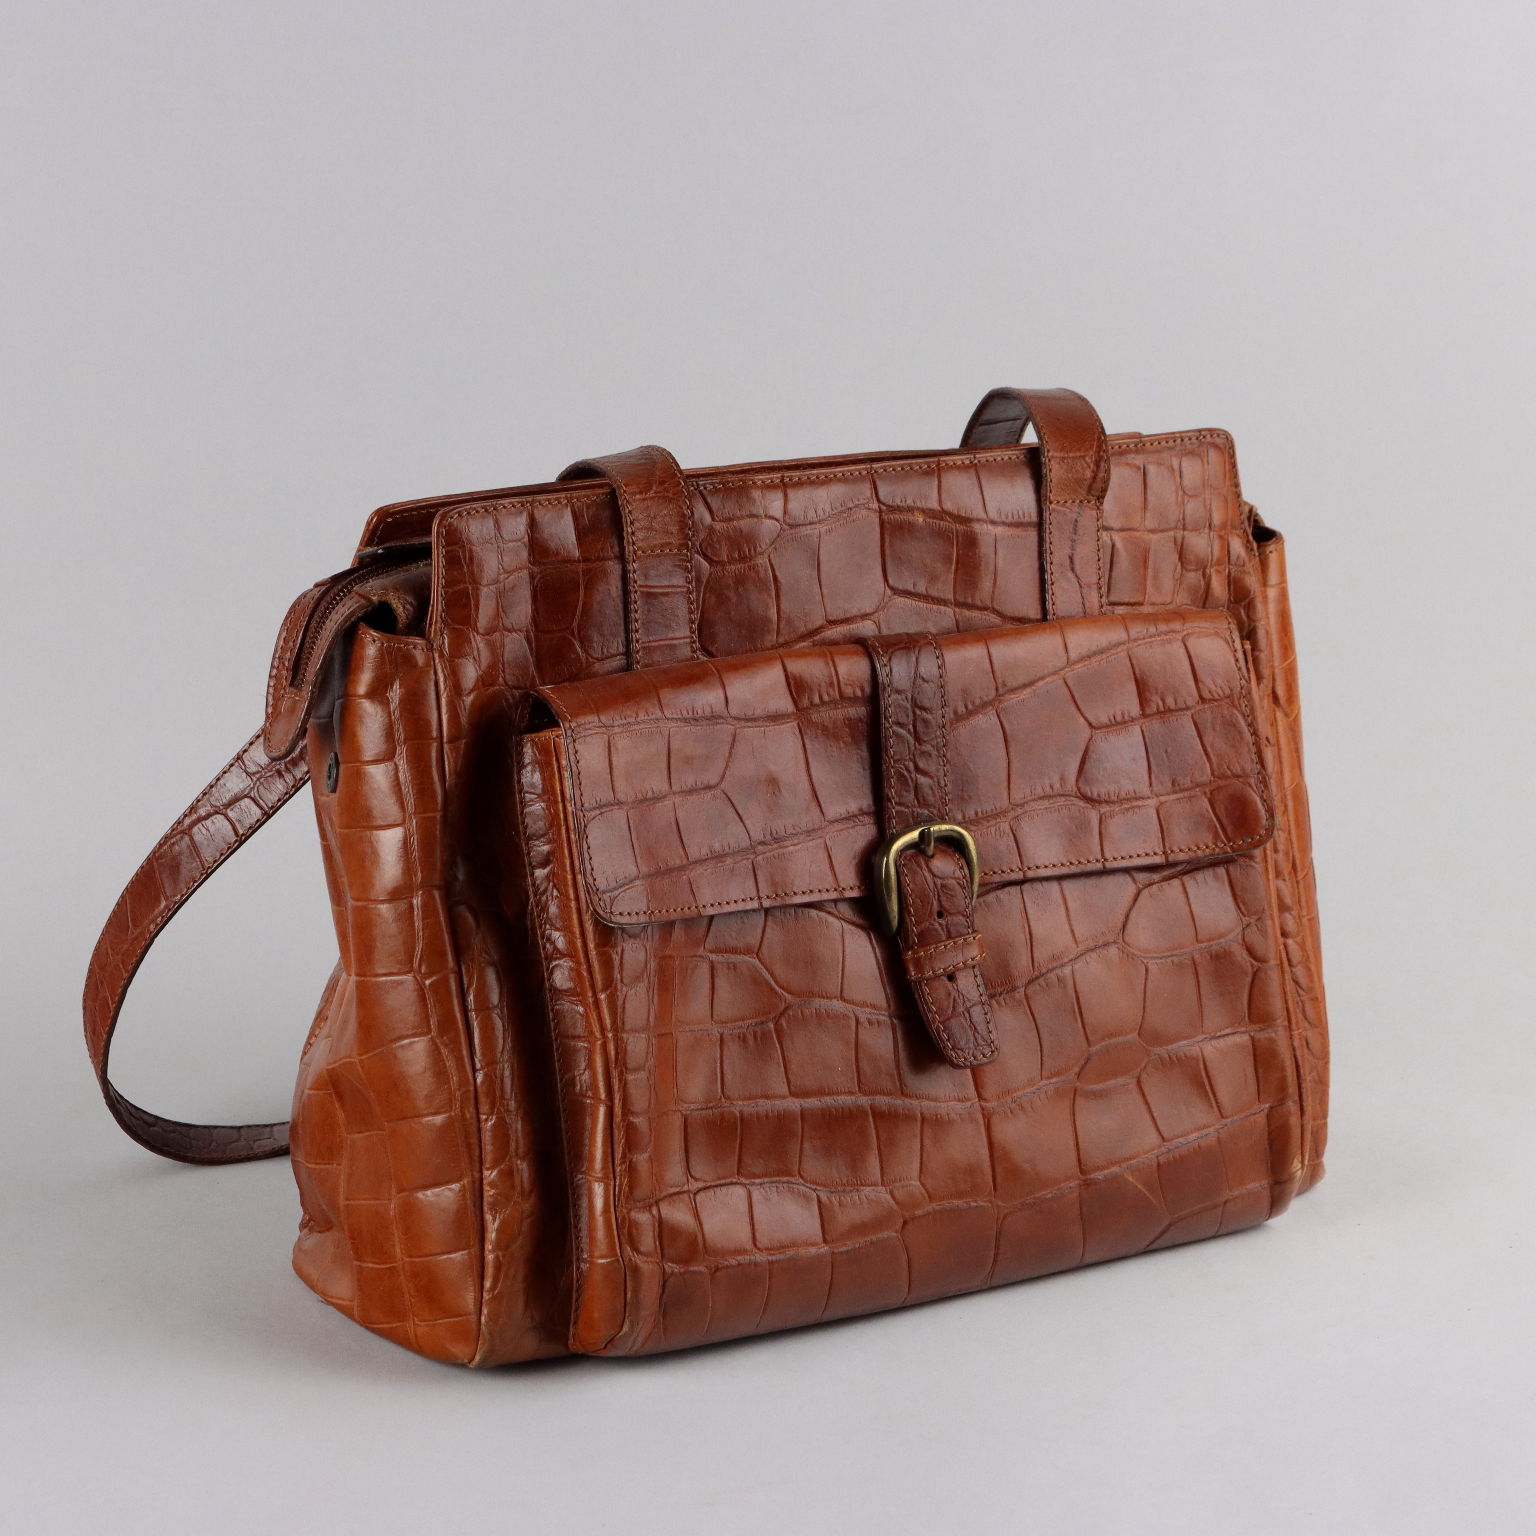 Max Mara Handbag Shoulder Bag Purse Caramel Patent Leather Italy | eBay